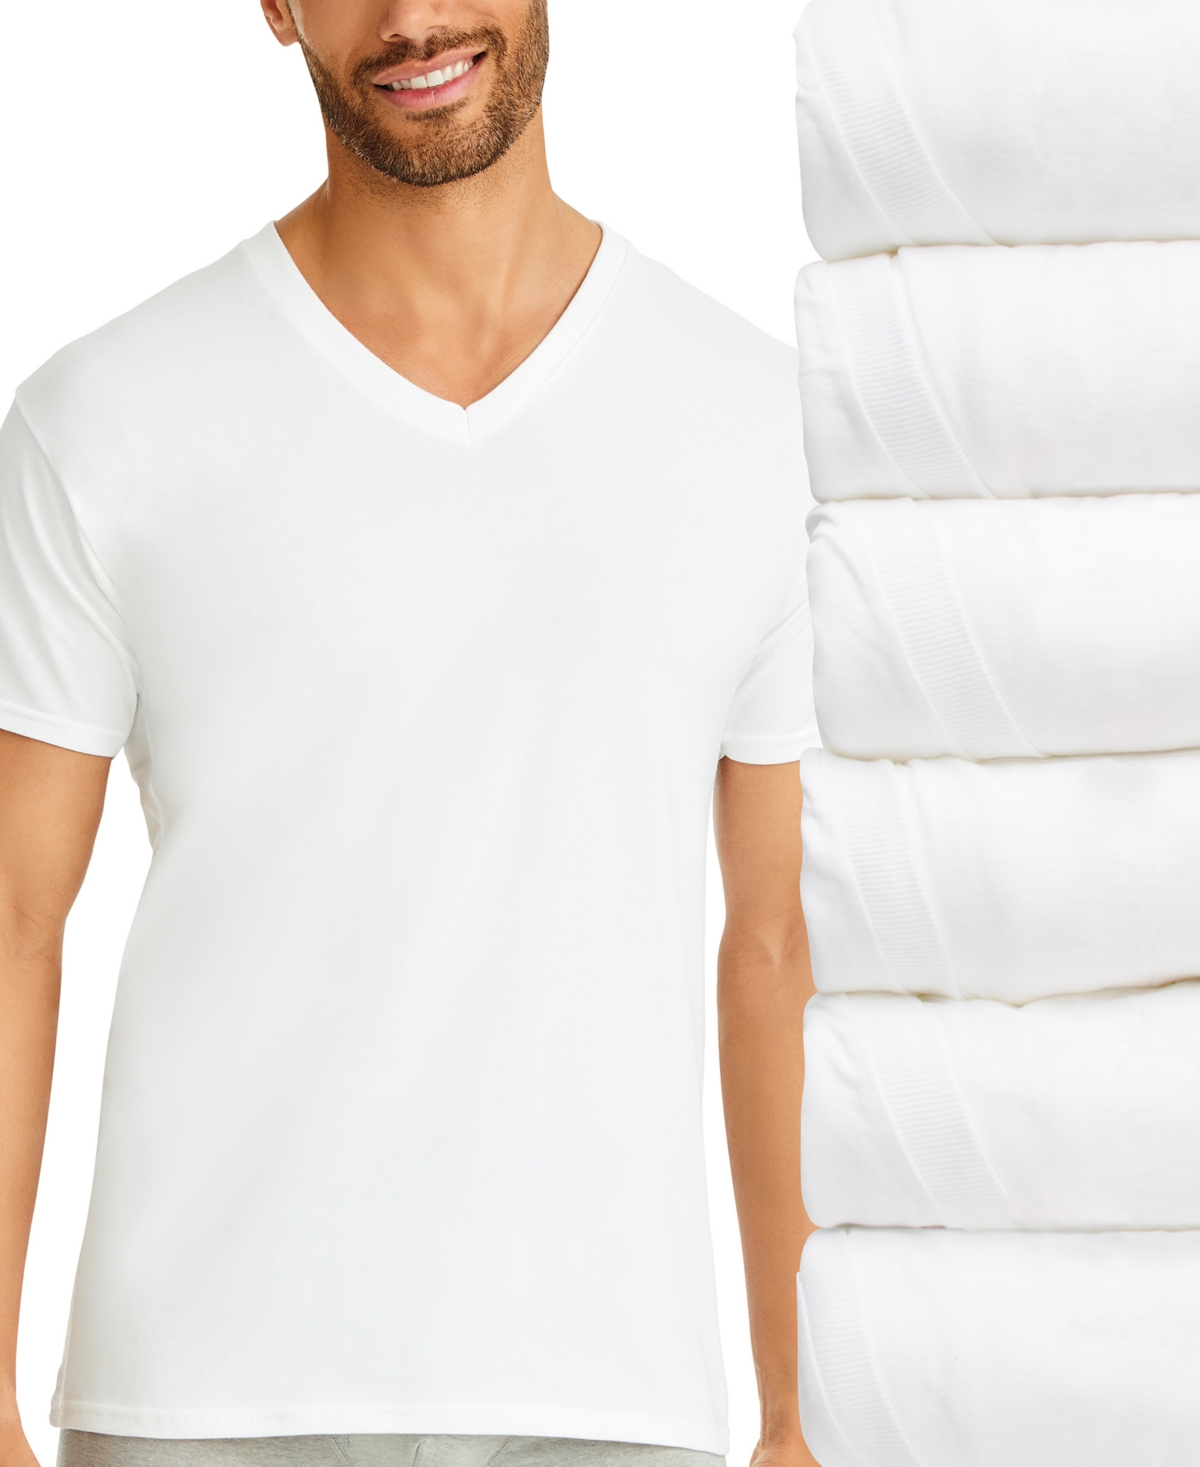 Men's Ultimate 6pk. V-Neck Undershirts - White